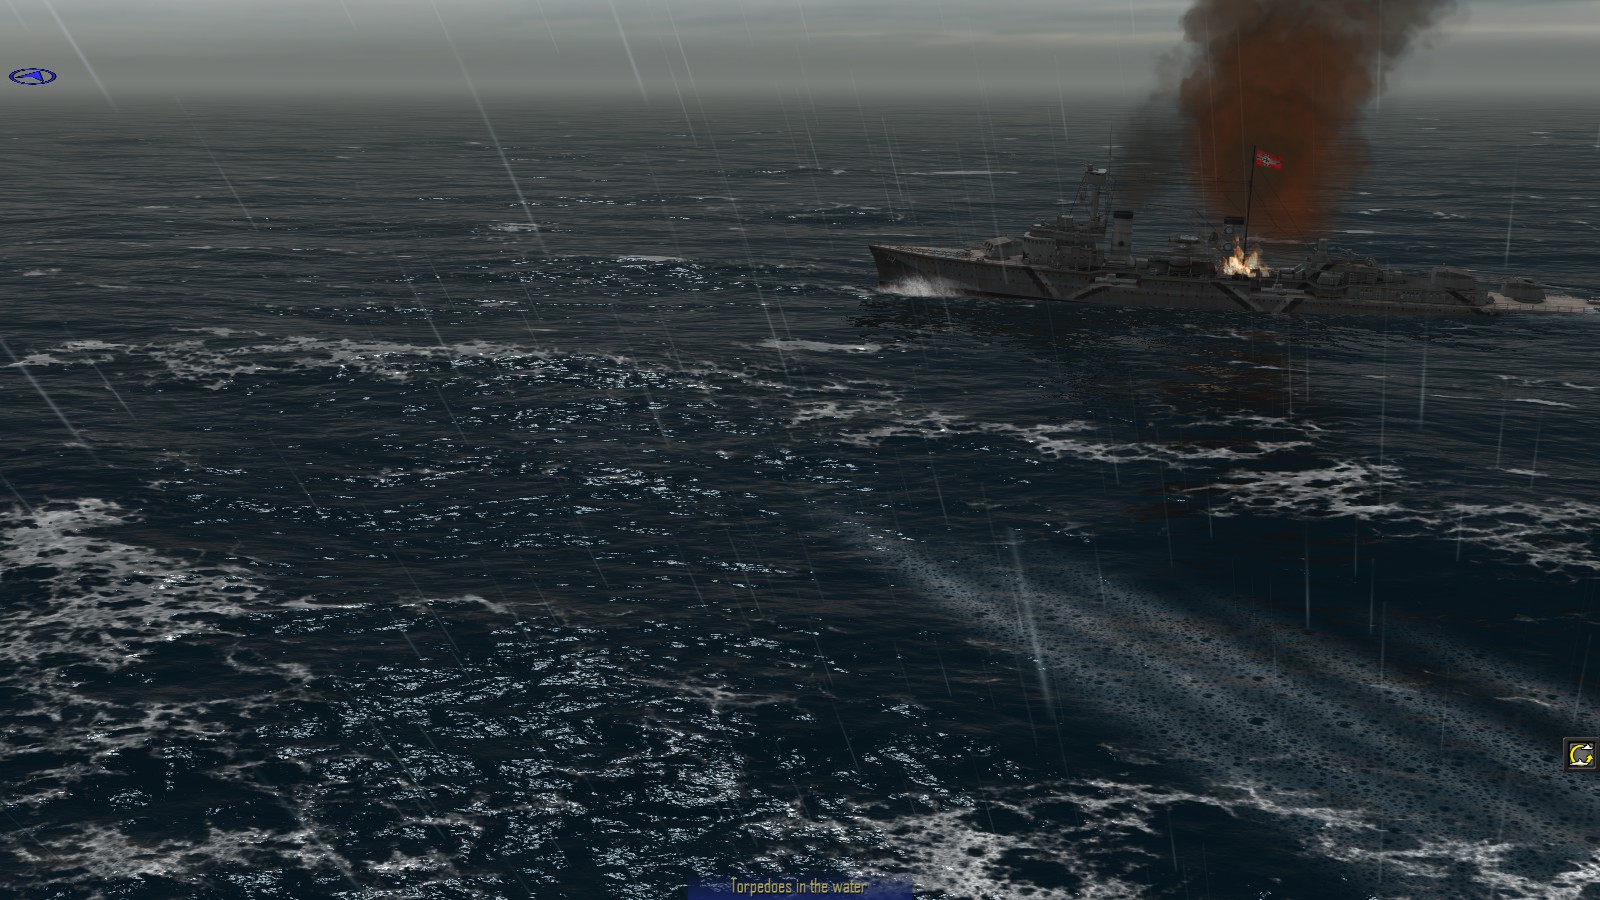 Atlantic Fleet - a destroyer's torpedoes near their target